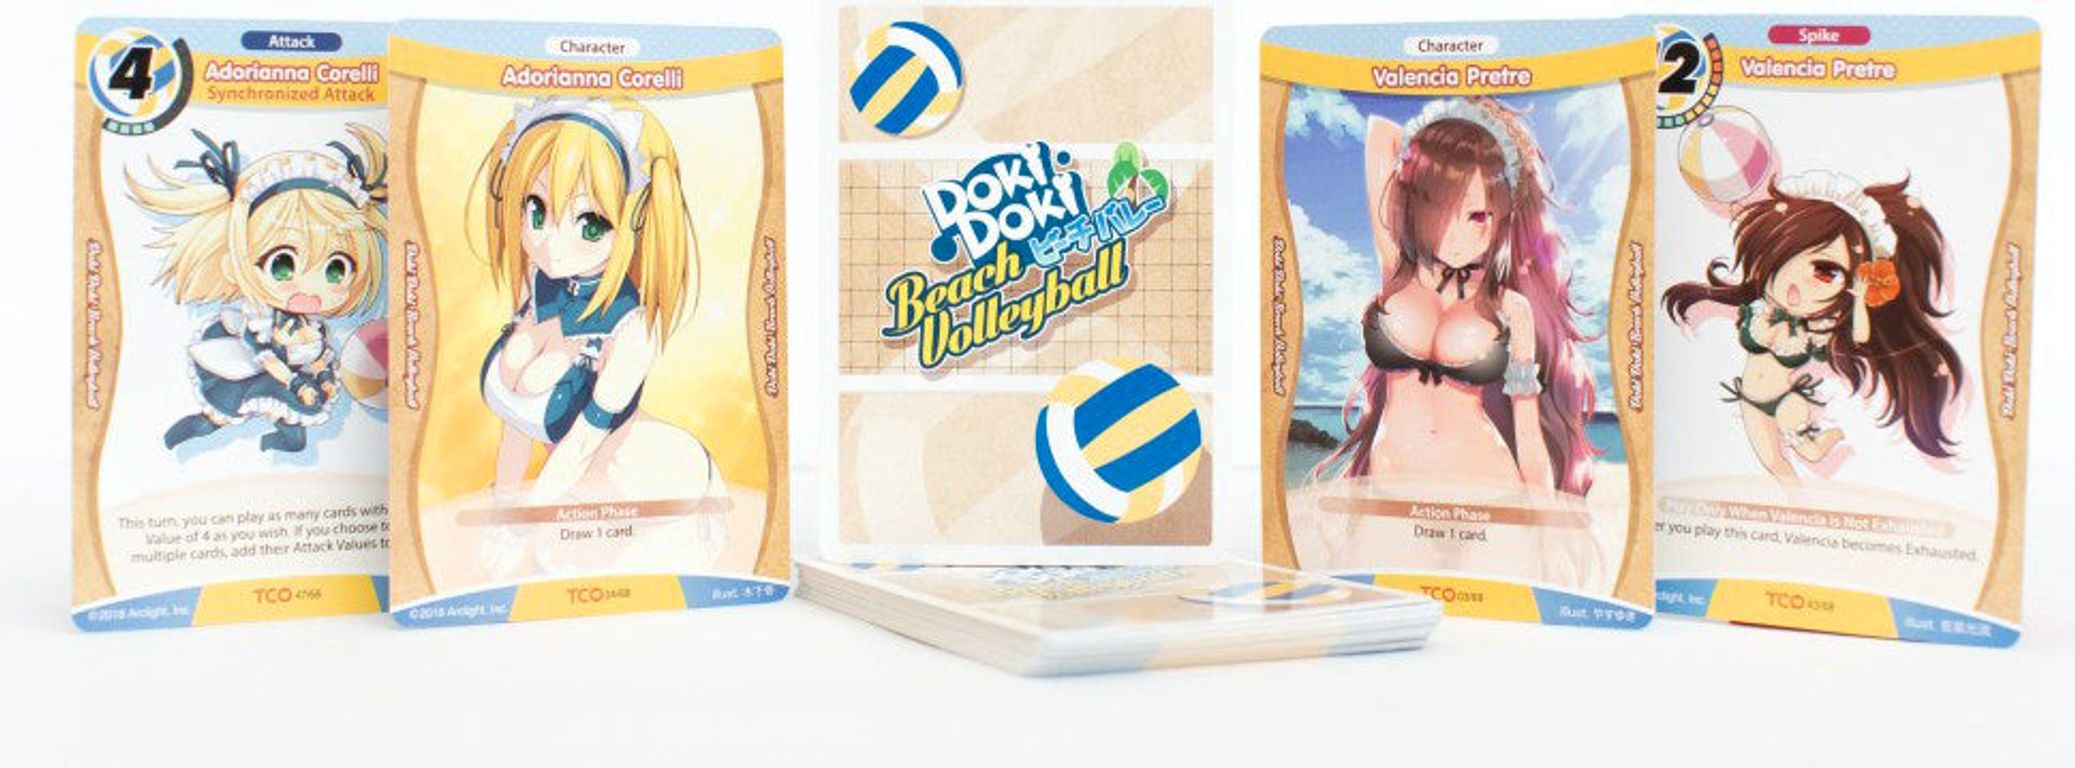 Tanto Cuore: Doki Doki Beach Volleyball karten